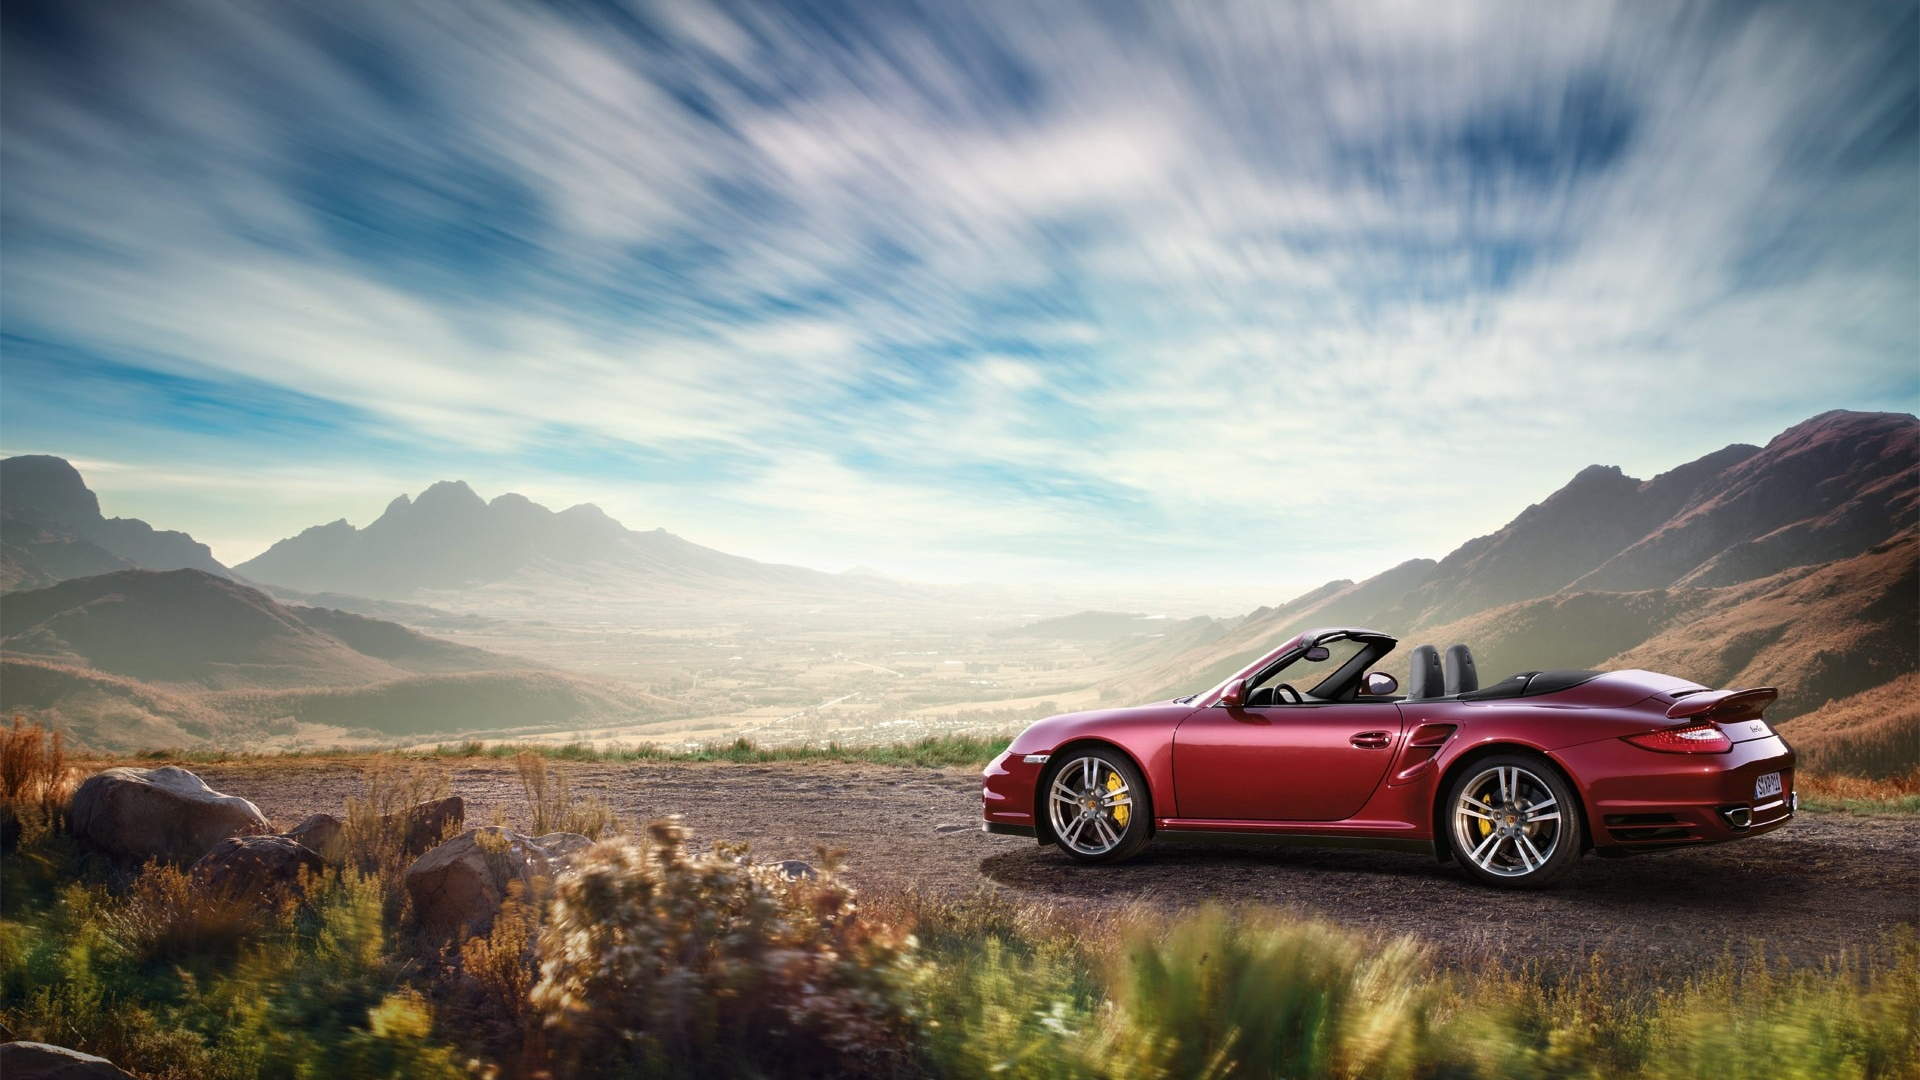 Porsche 911, auto, пейзажи, авто, Porsche 911 Turbo, landscapes, природа, nature